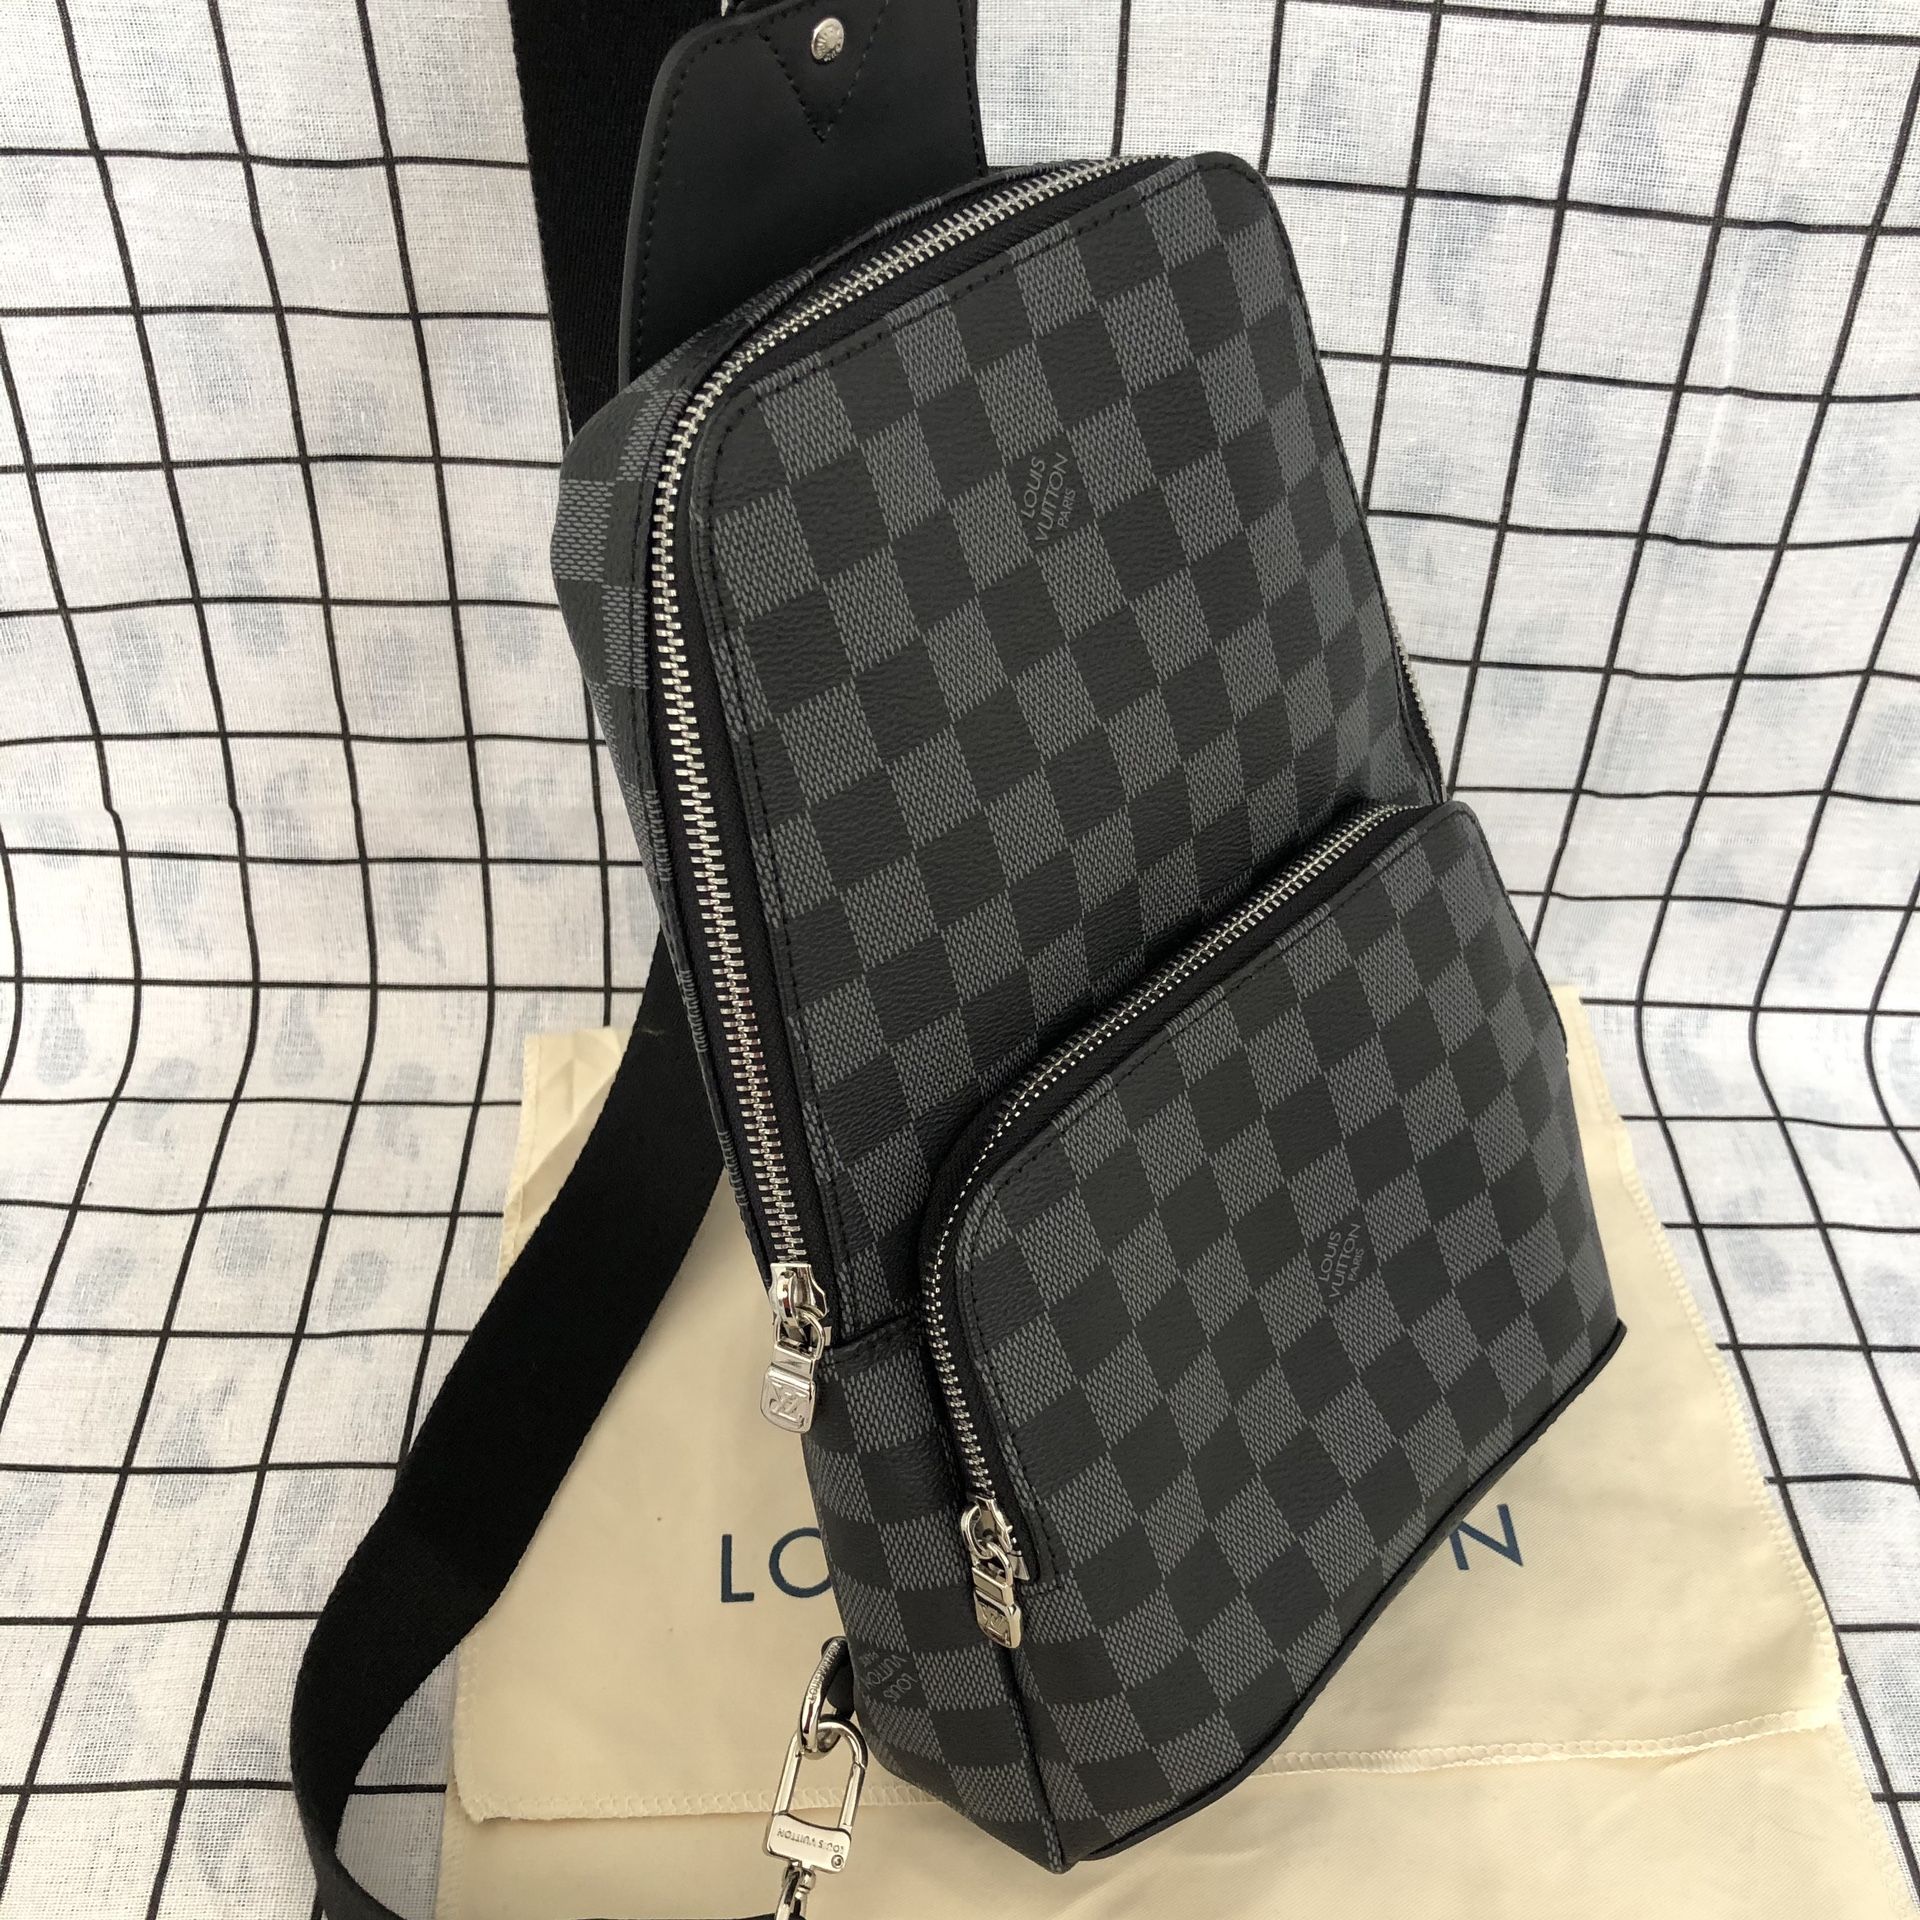 Authentic Louis Vuitton Avenue Sling Damier Graphite bagpack handbag tote